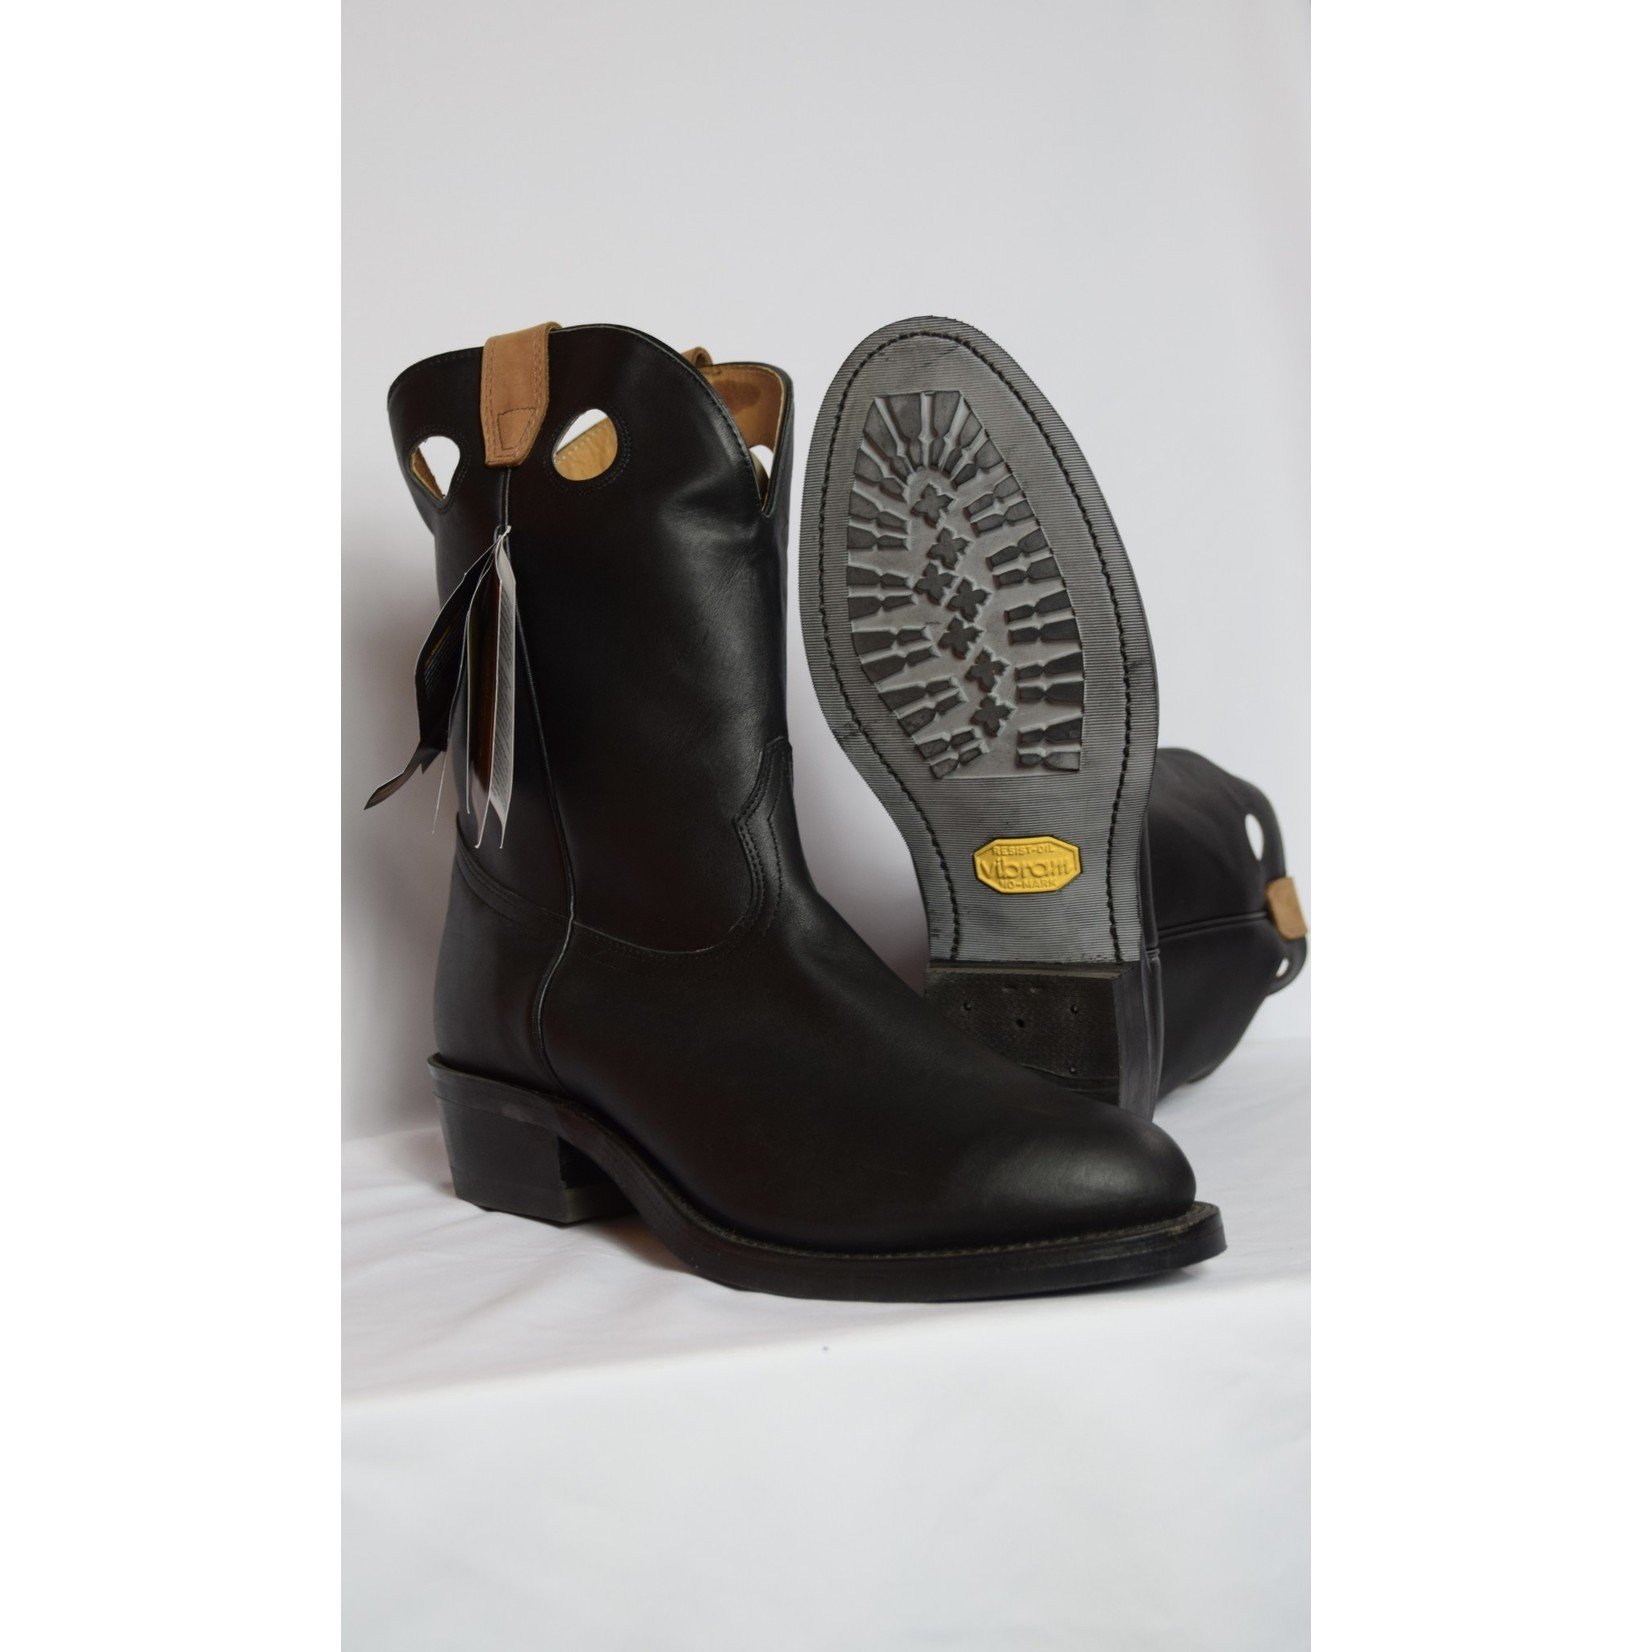 Boulet Boulet Men’s Cowboy Boot Black Rounded Toe Vibram Oil Resistant Sole Western Heel 6110 5E